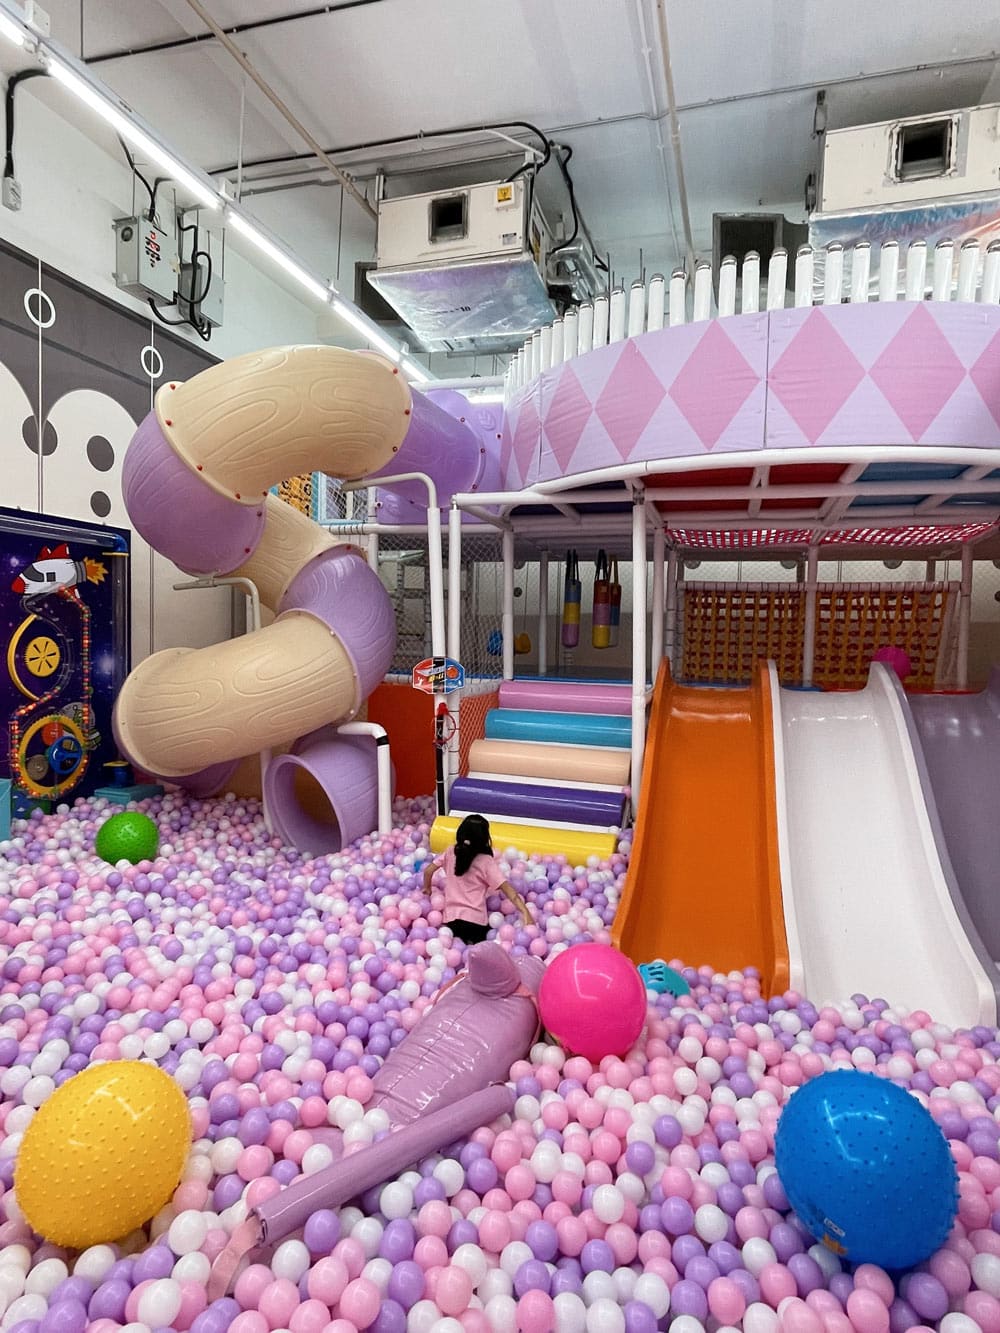 Citysquare Mall Playgrounds Slides